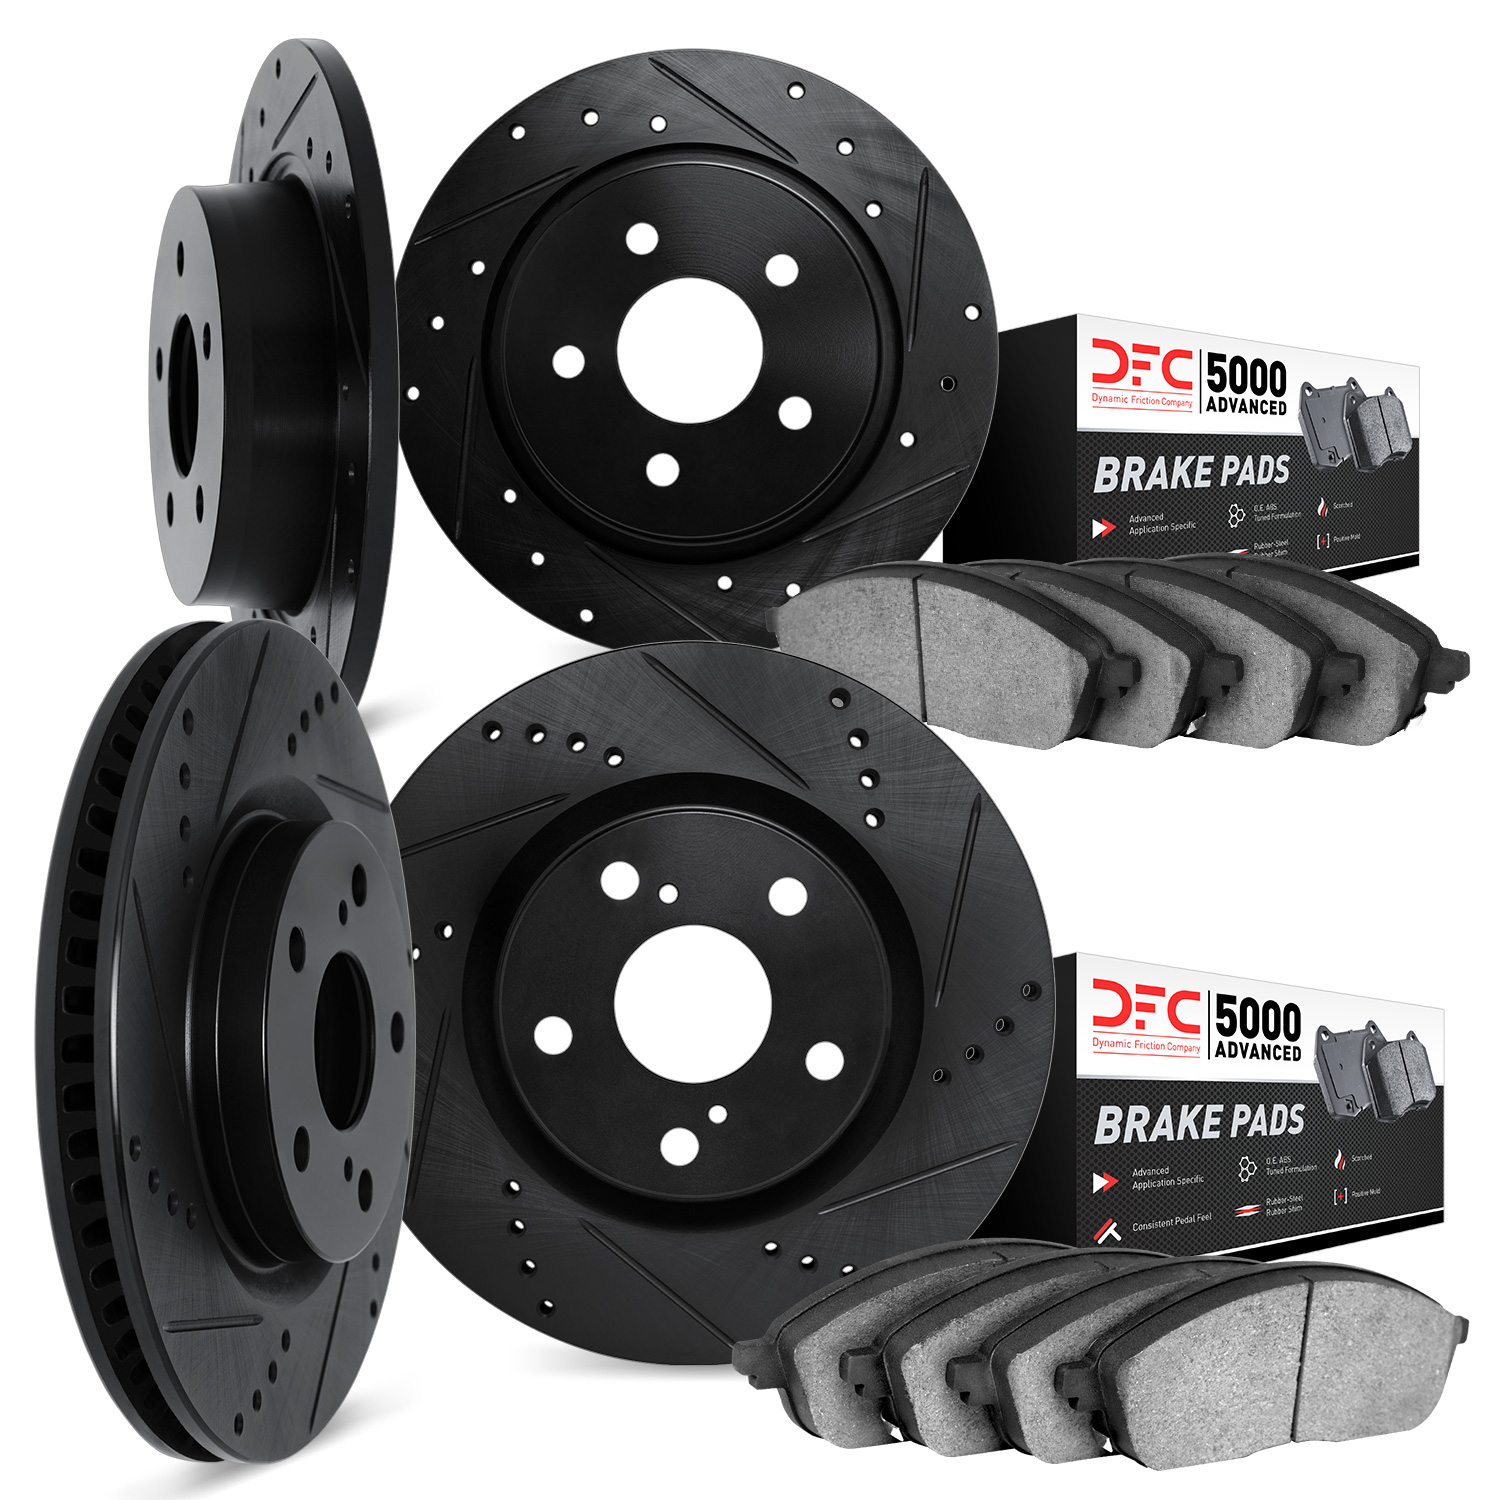 8504-42056 Drilled/Slotted Brake Rotors w/5000 Advanced Brake Pads Kit [Black], 2014-2020 Mopar, Position: Front and Rear